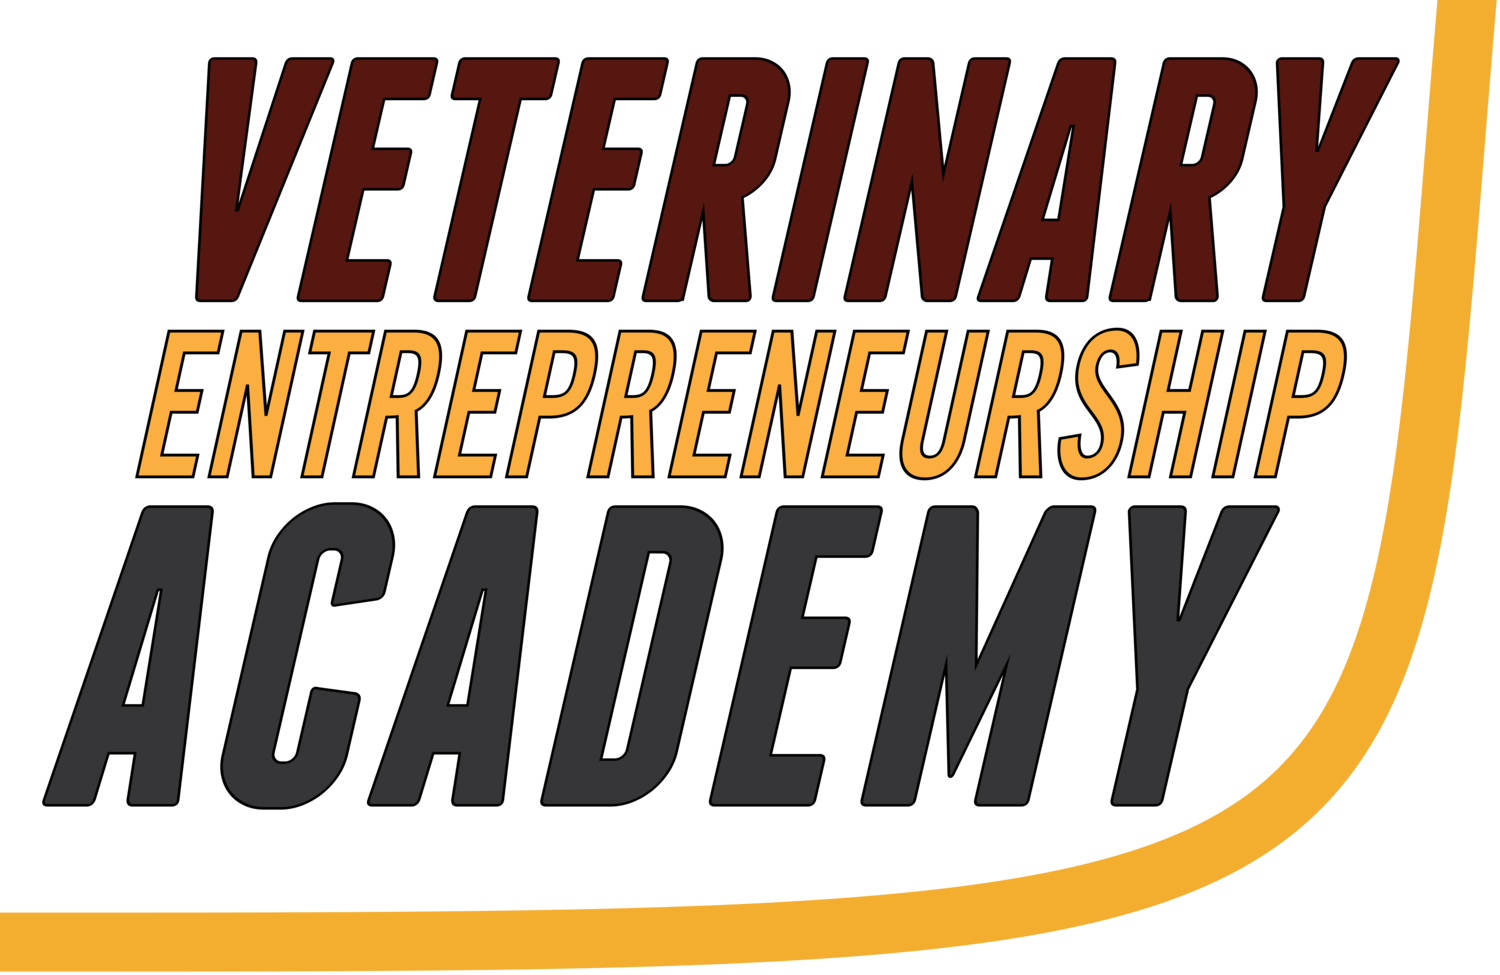 Veterinary Entrepreneurship Academy Logo